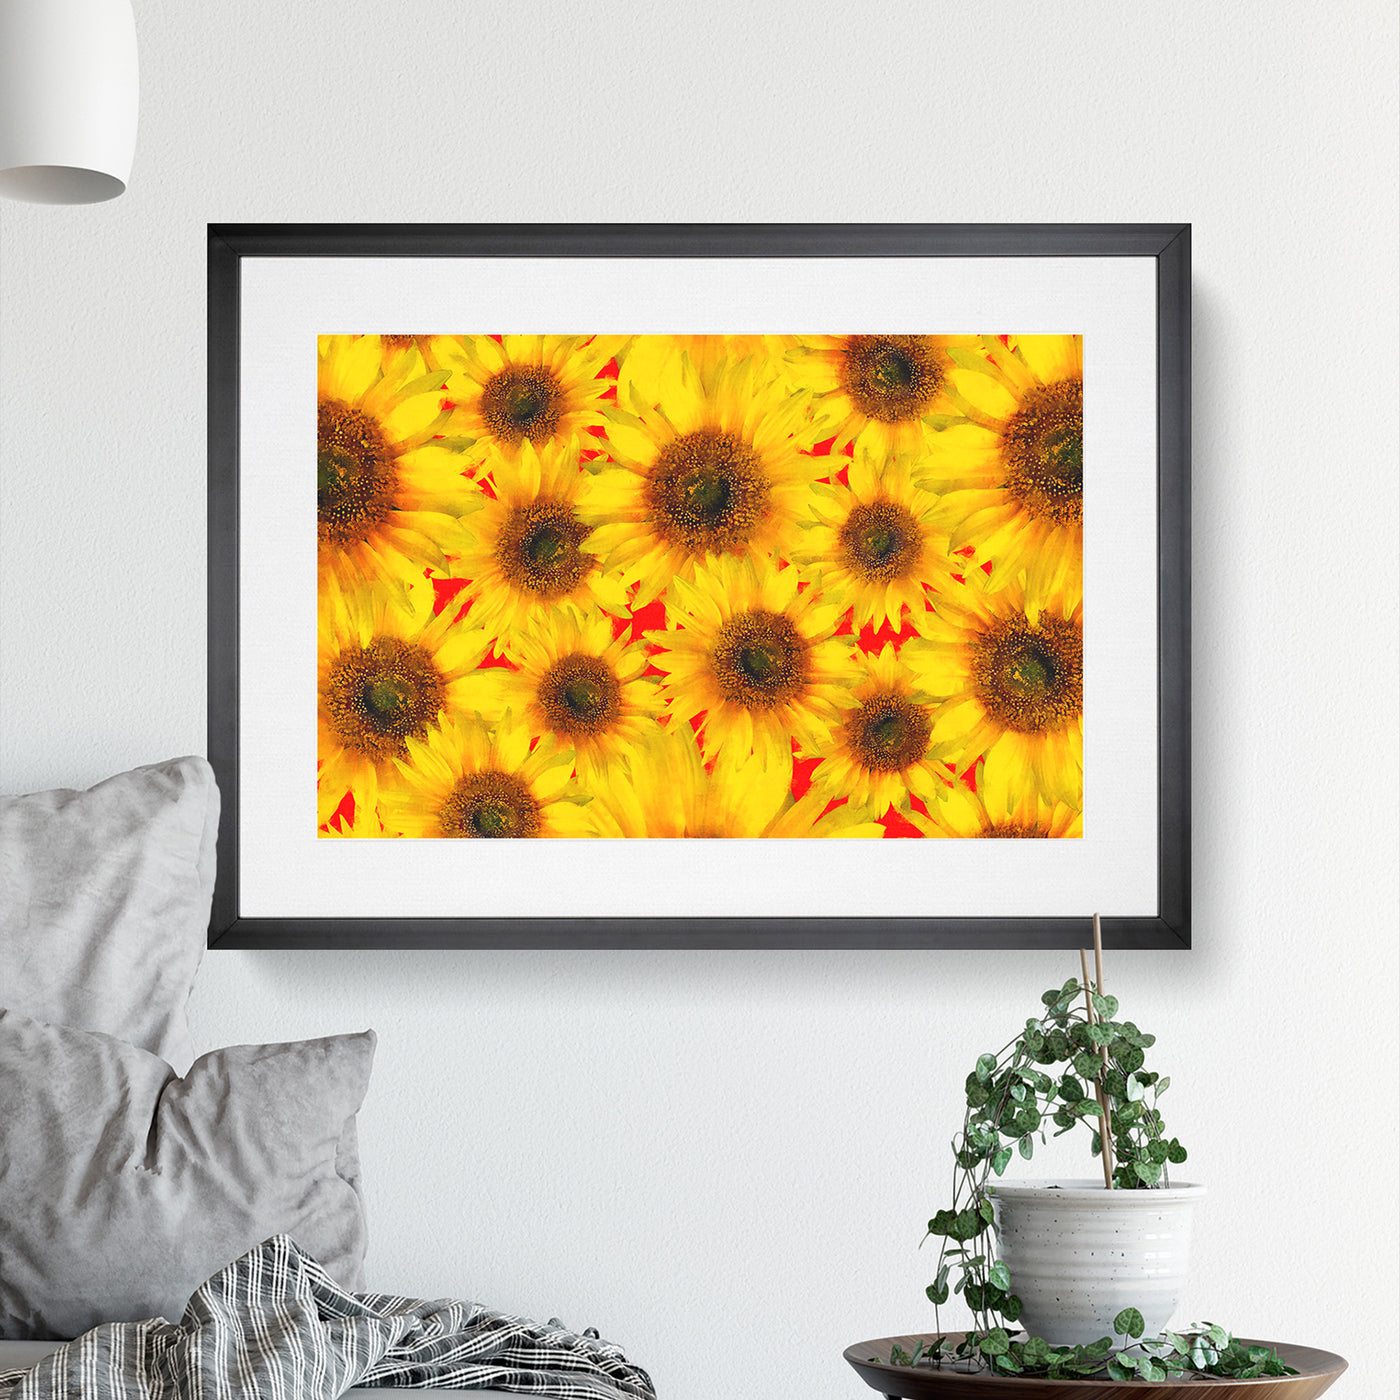 Wall Of Yellow Sunflowers